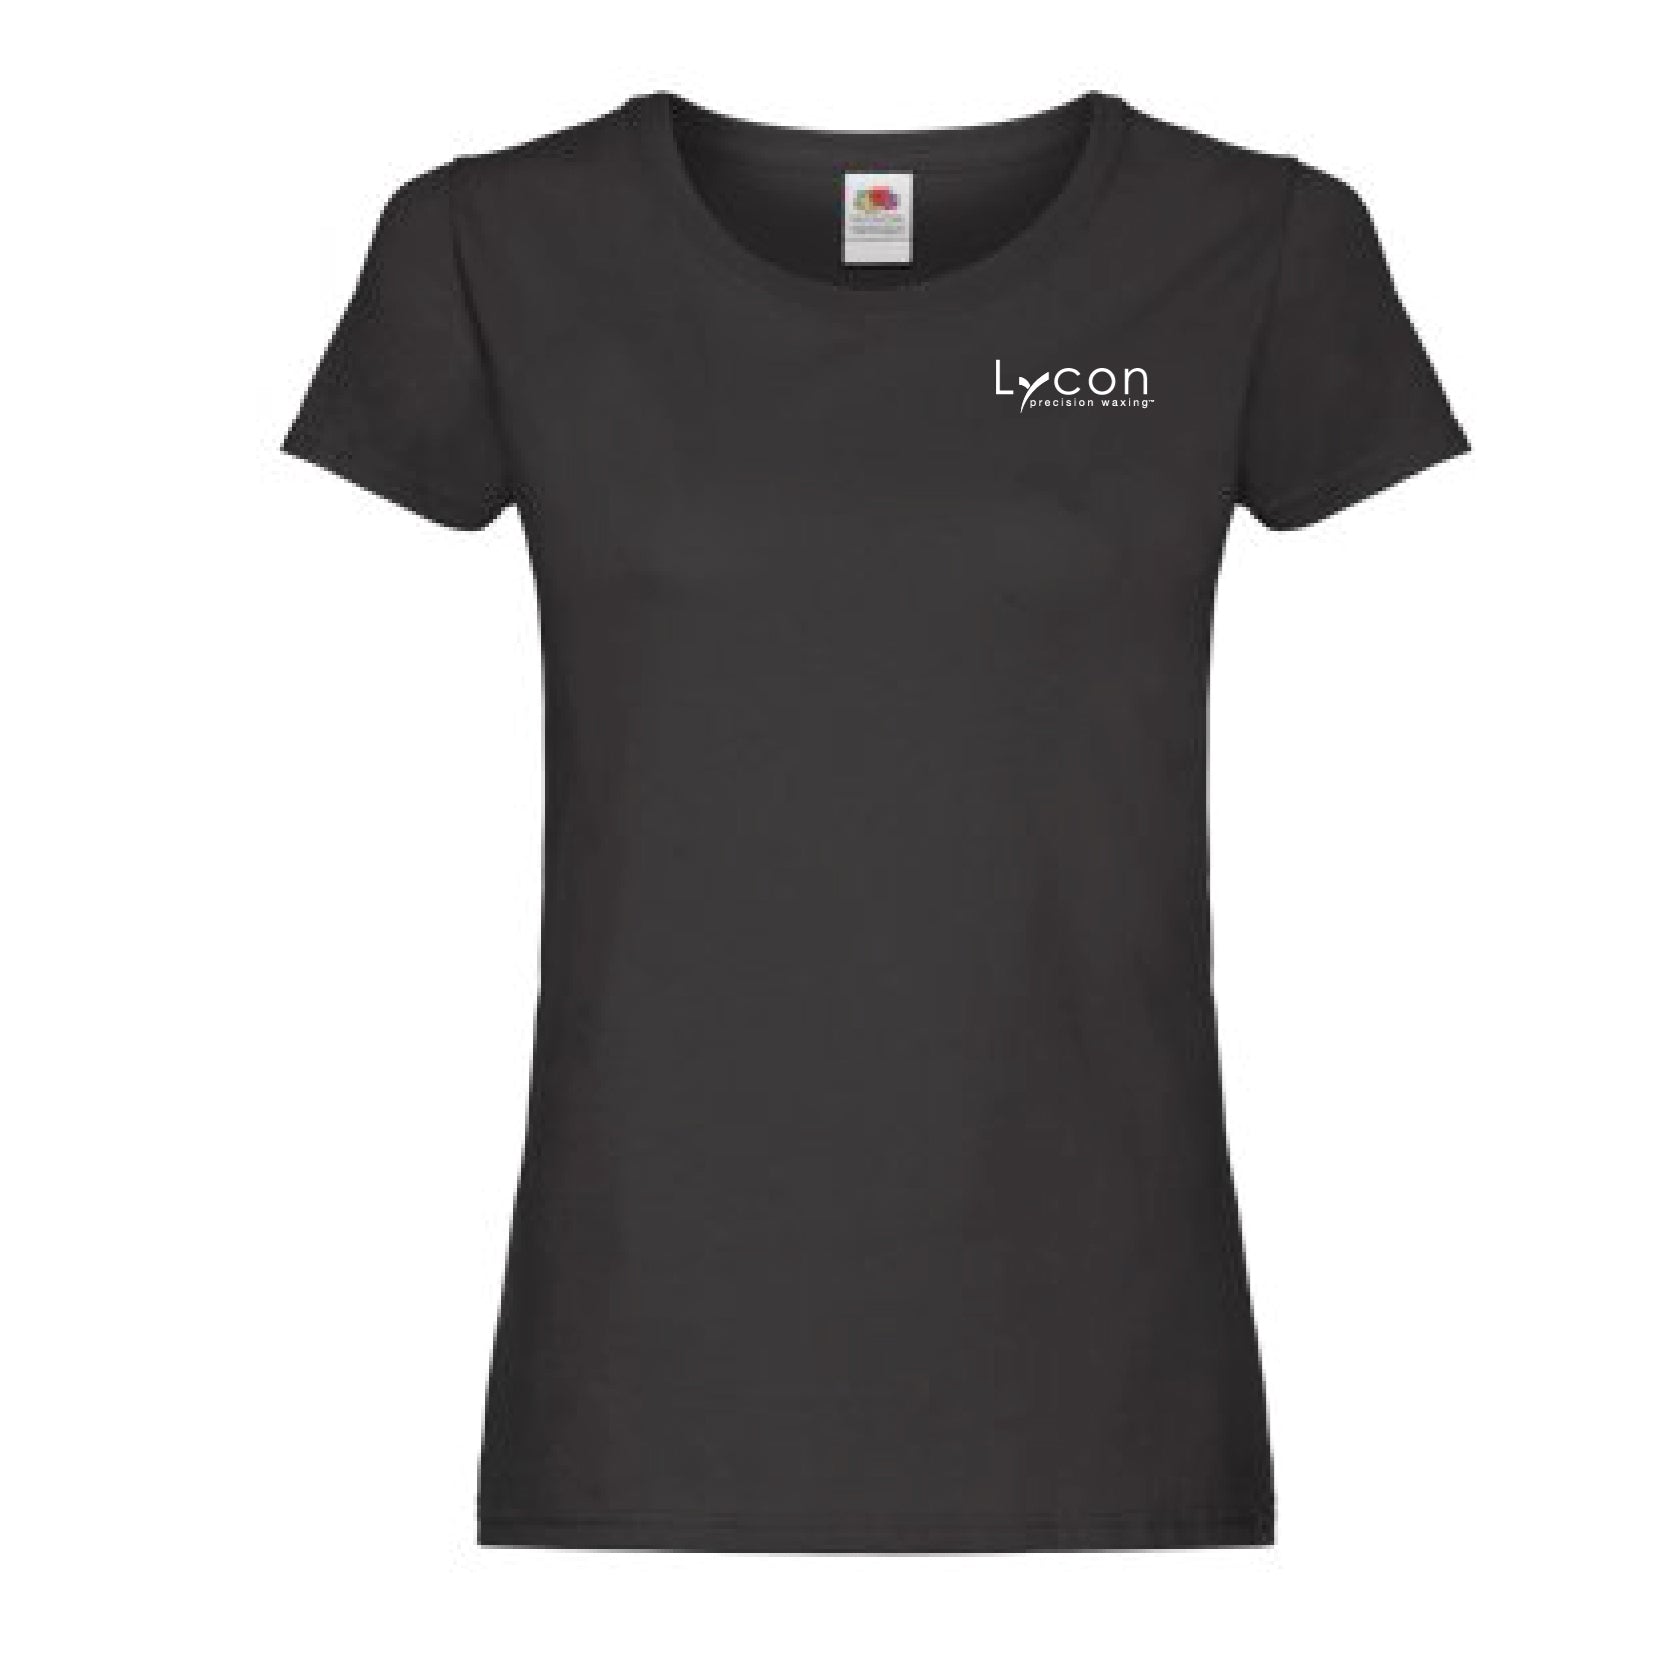 S - LYCON Waxing Expert T-Shirt